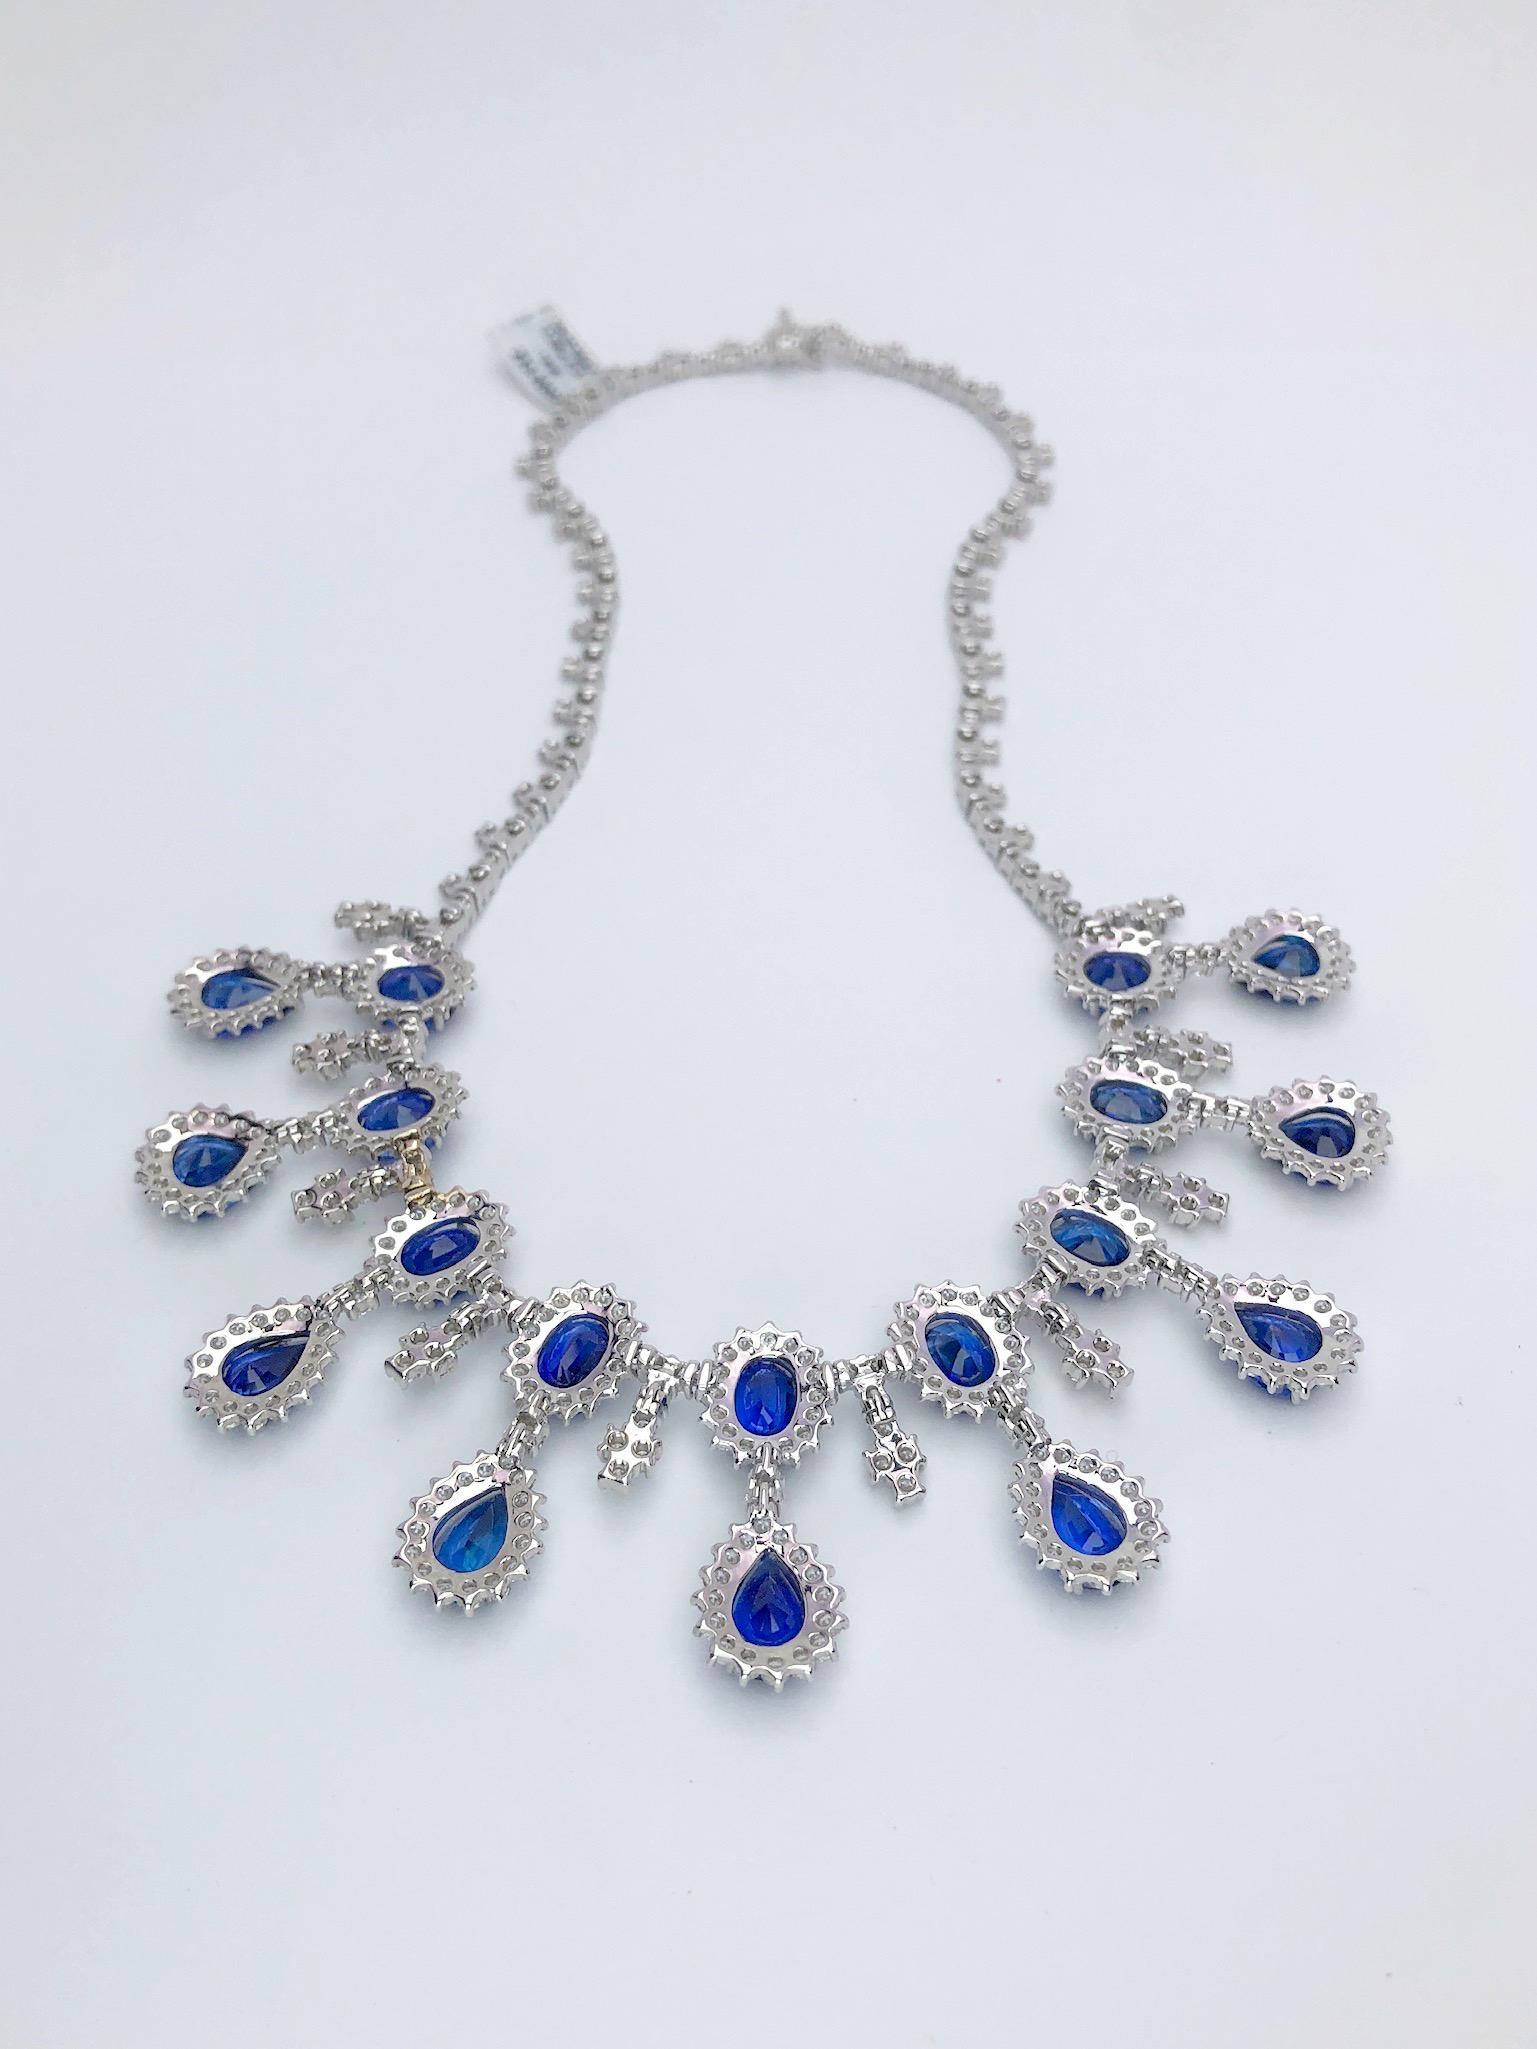 18 Karat White Gold, 37.93 Carat Blue Sapphire and 13.89 Carat Diamond Necklace For Sale 1